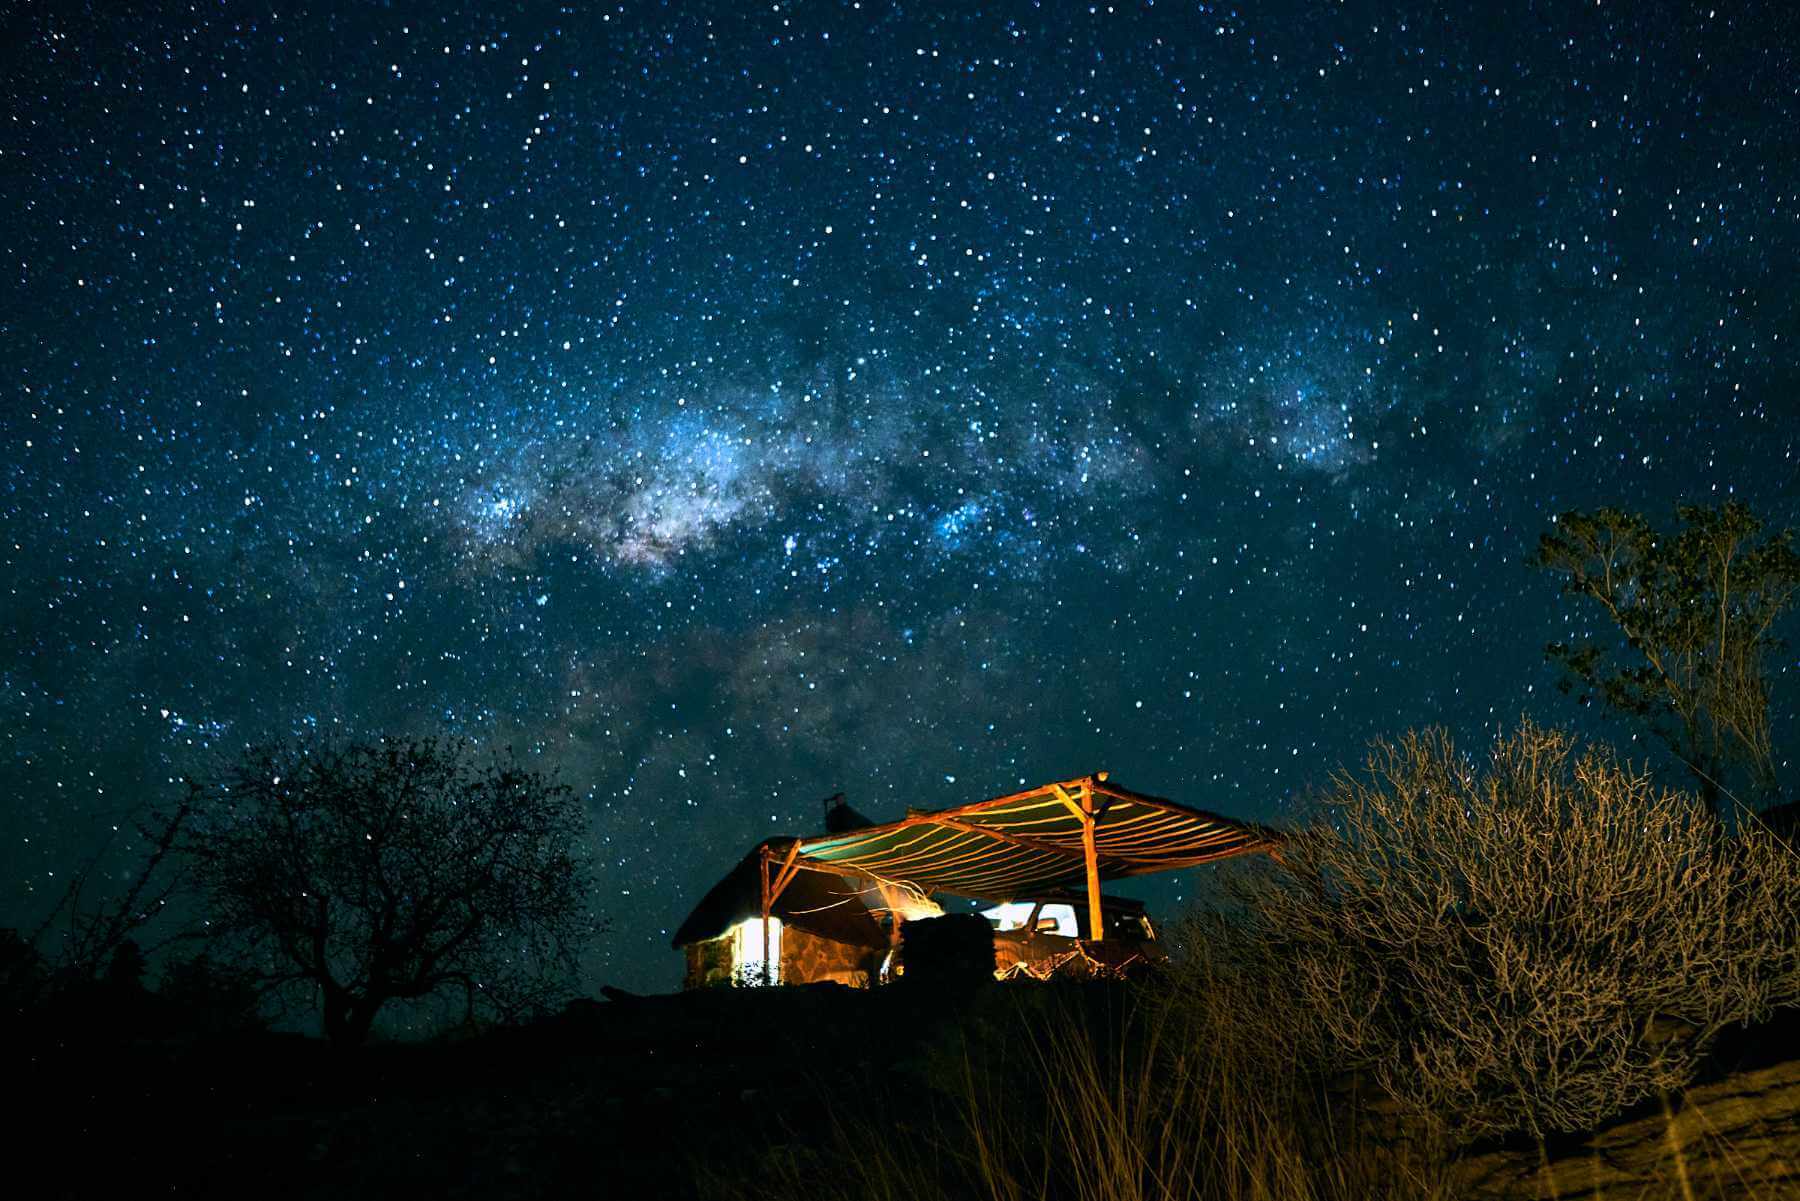 The Crisp, clear skies of the desert offer phenomenal star-gazing opportunities.